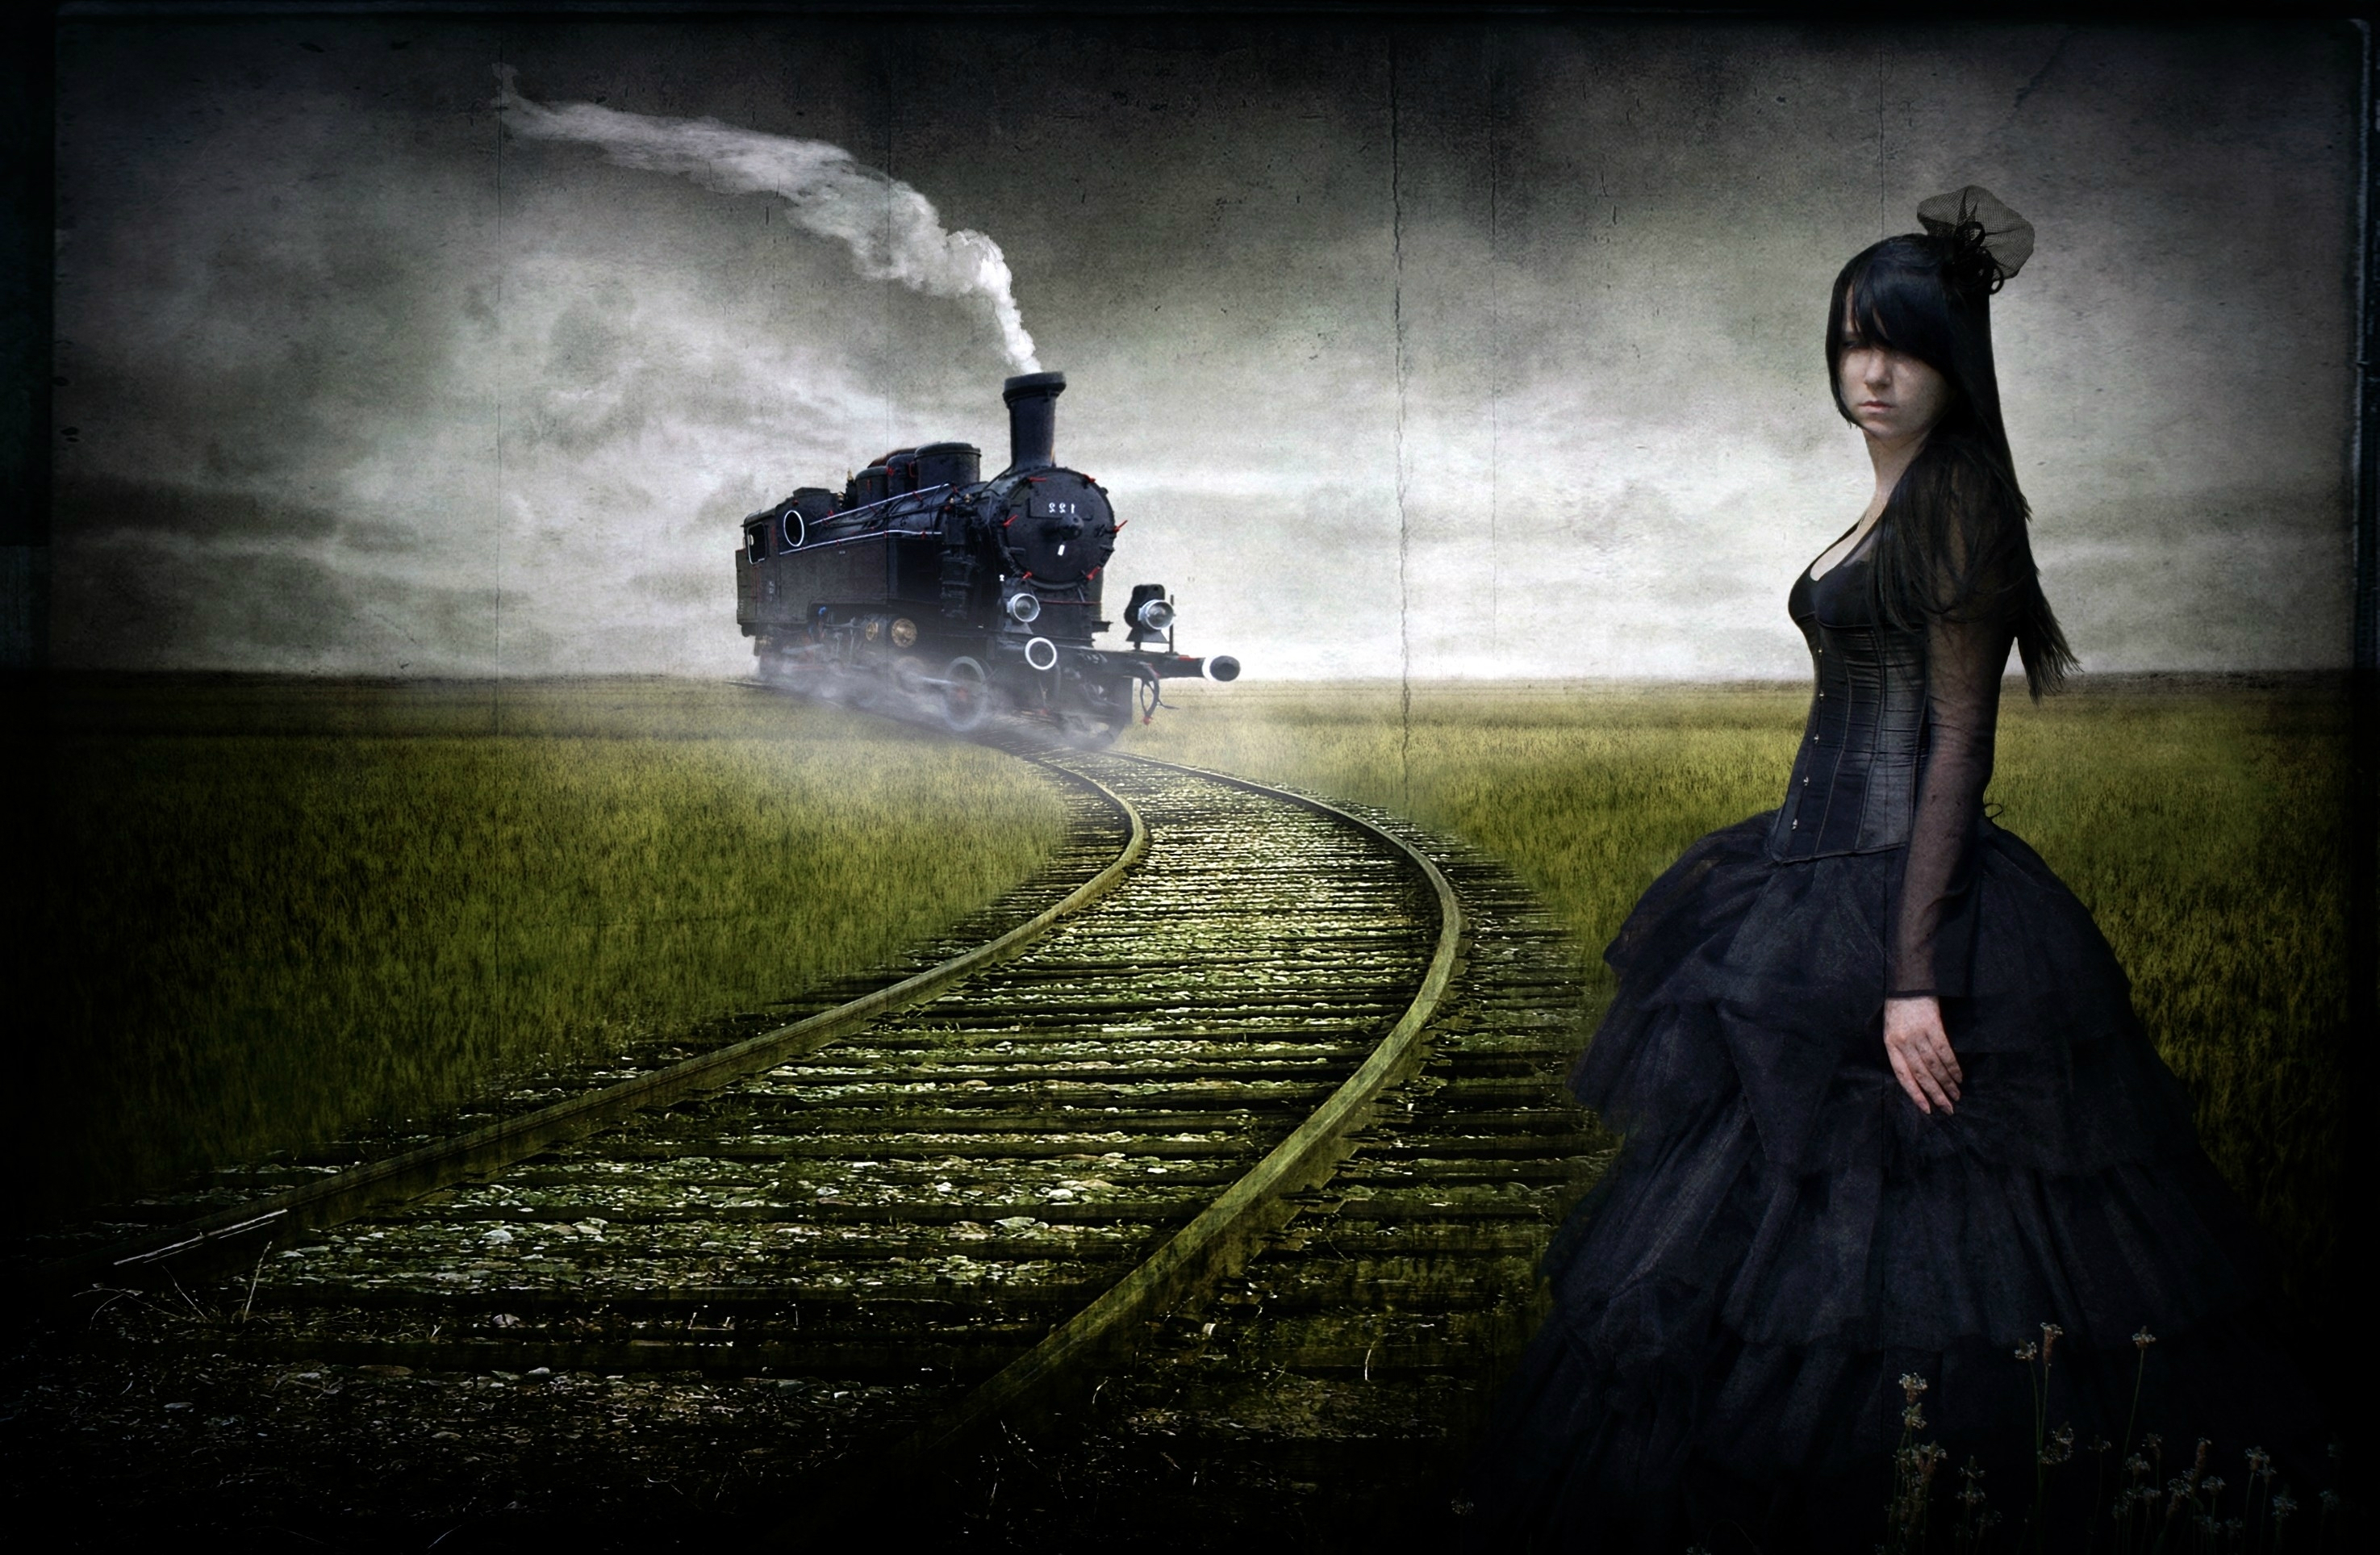 Dark Gothic Mood Situation Train 2950x1927